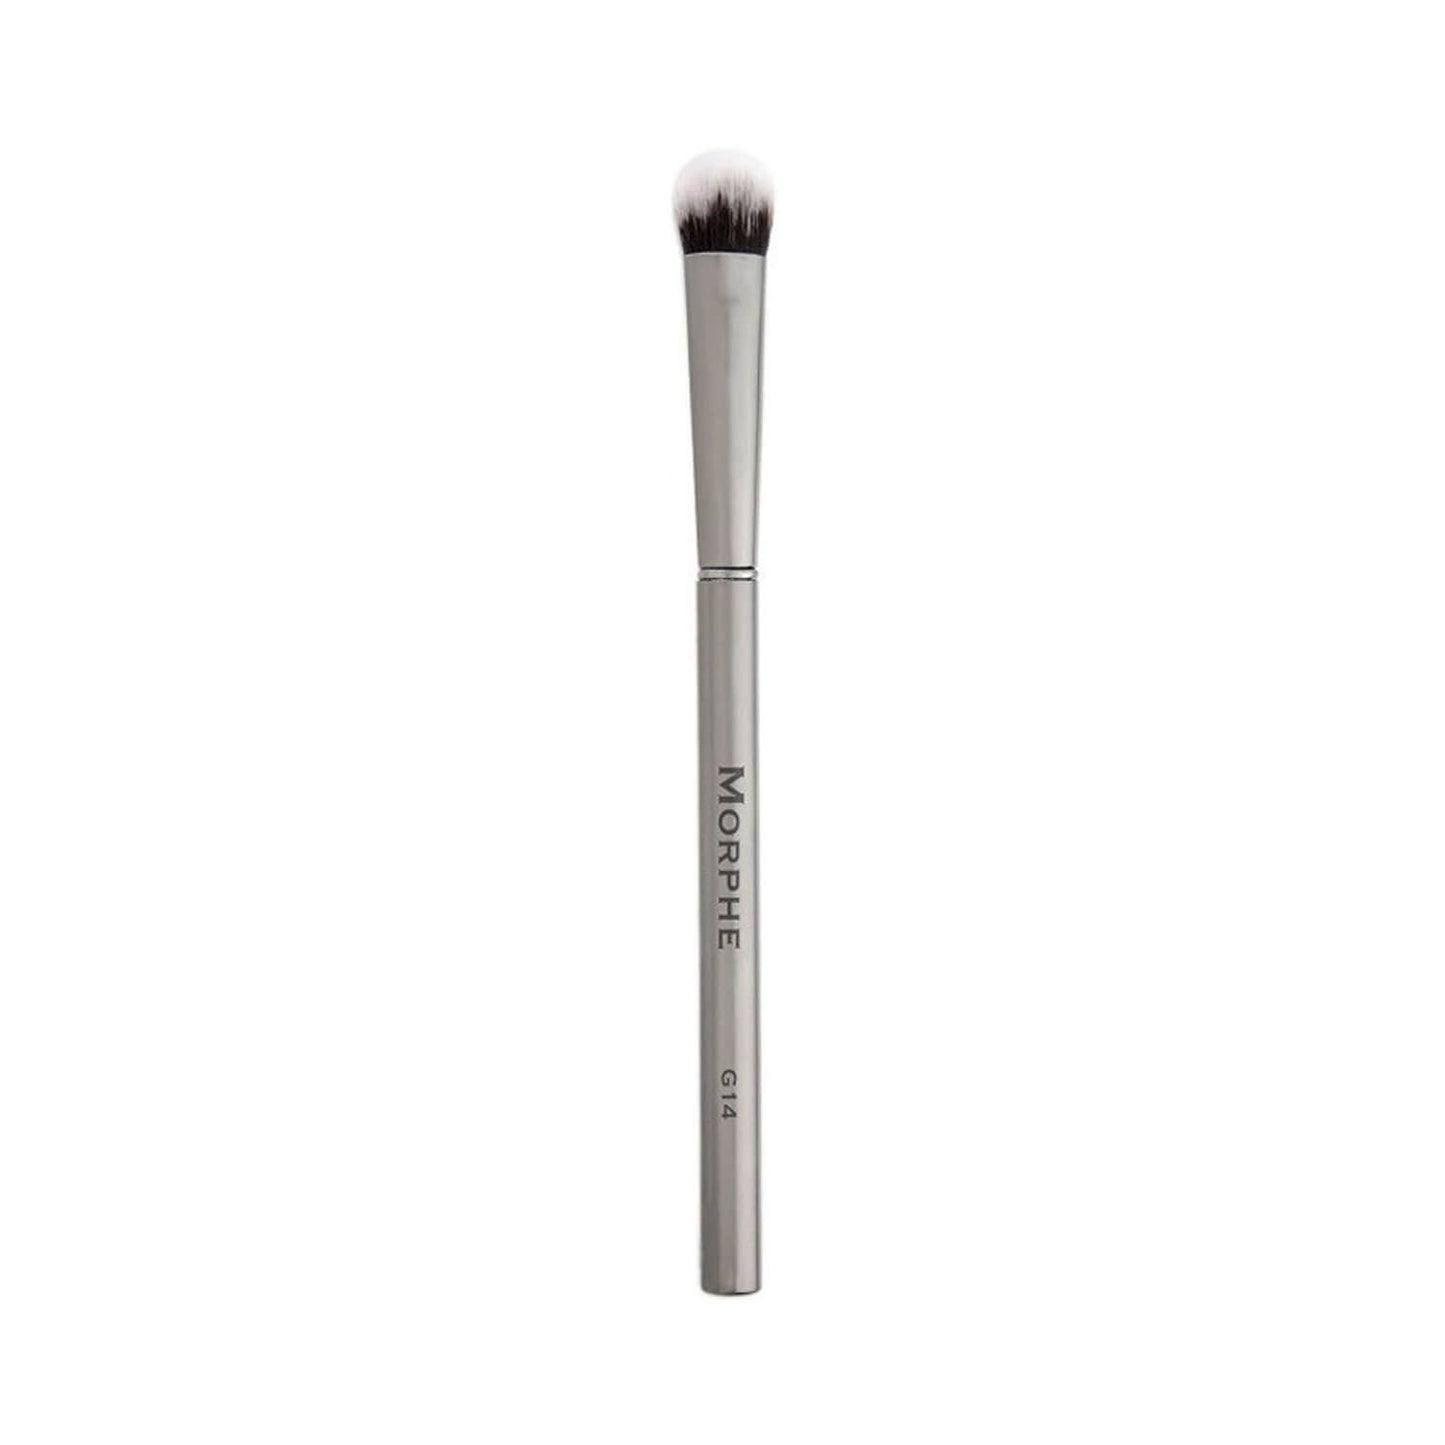 Morphe Cosmetics G14 Oval Shadow Brush